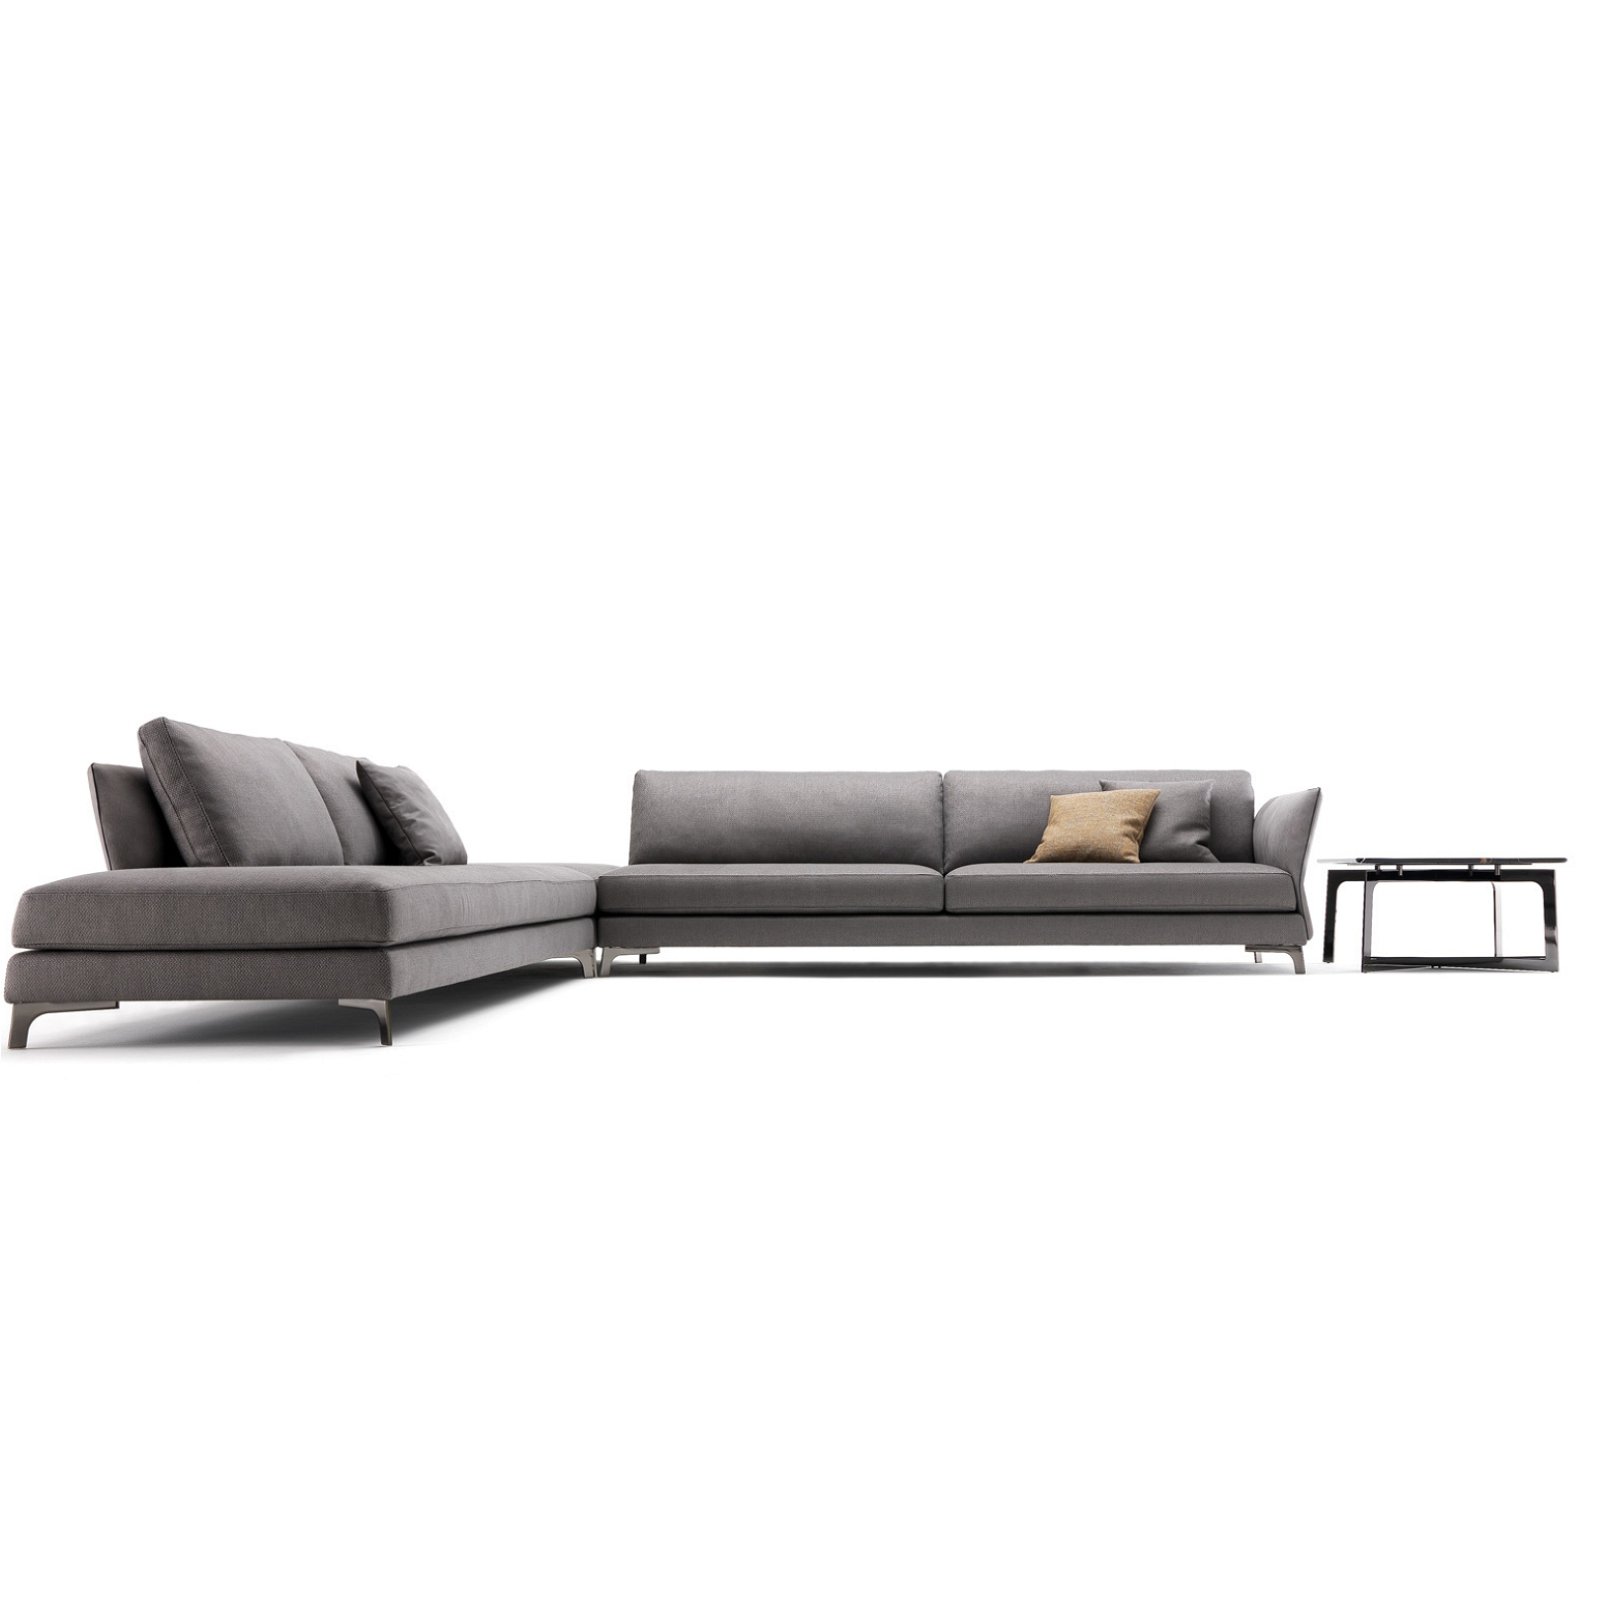 Ceppi the Italian Touch Blossom Modular sofa